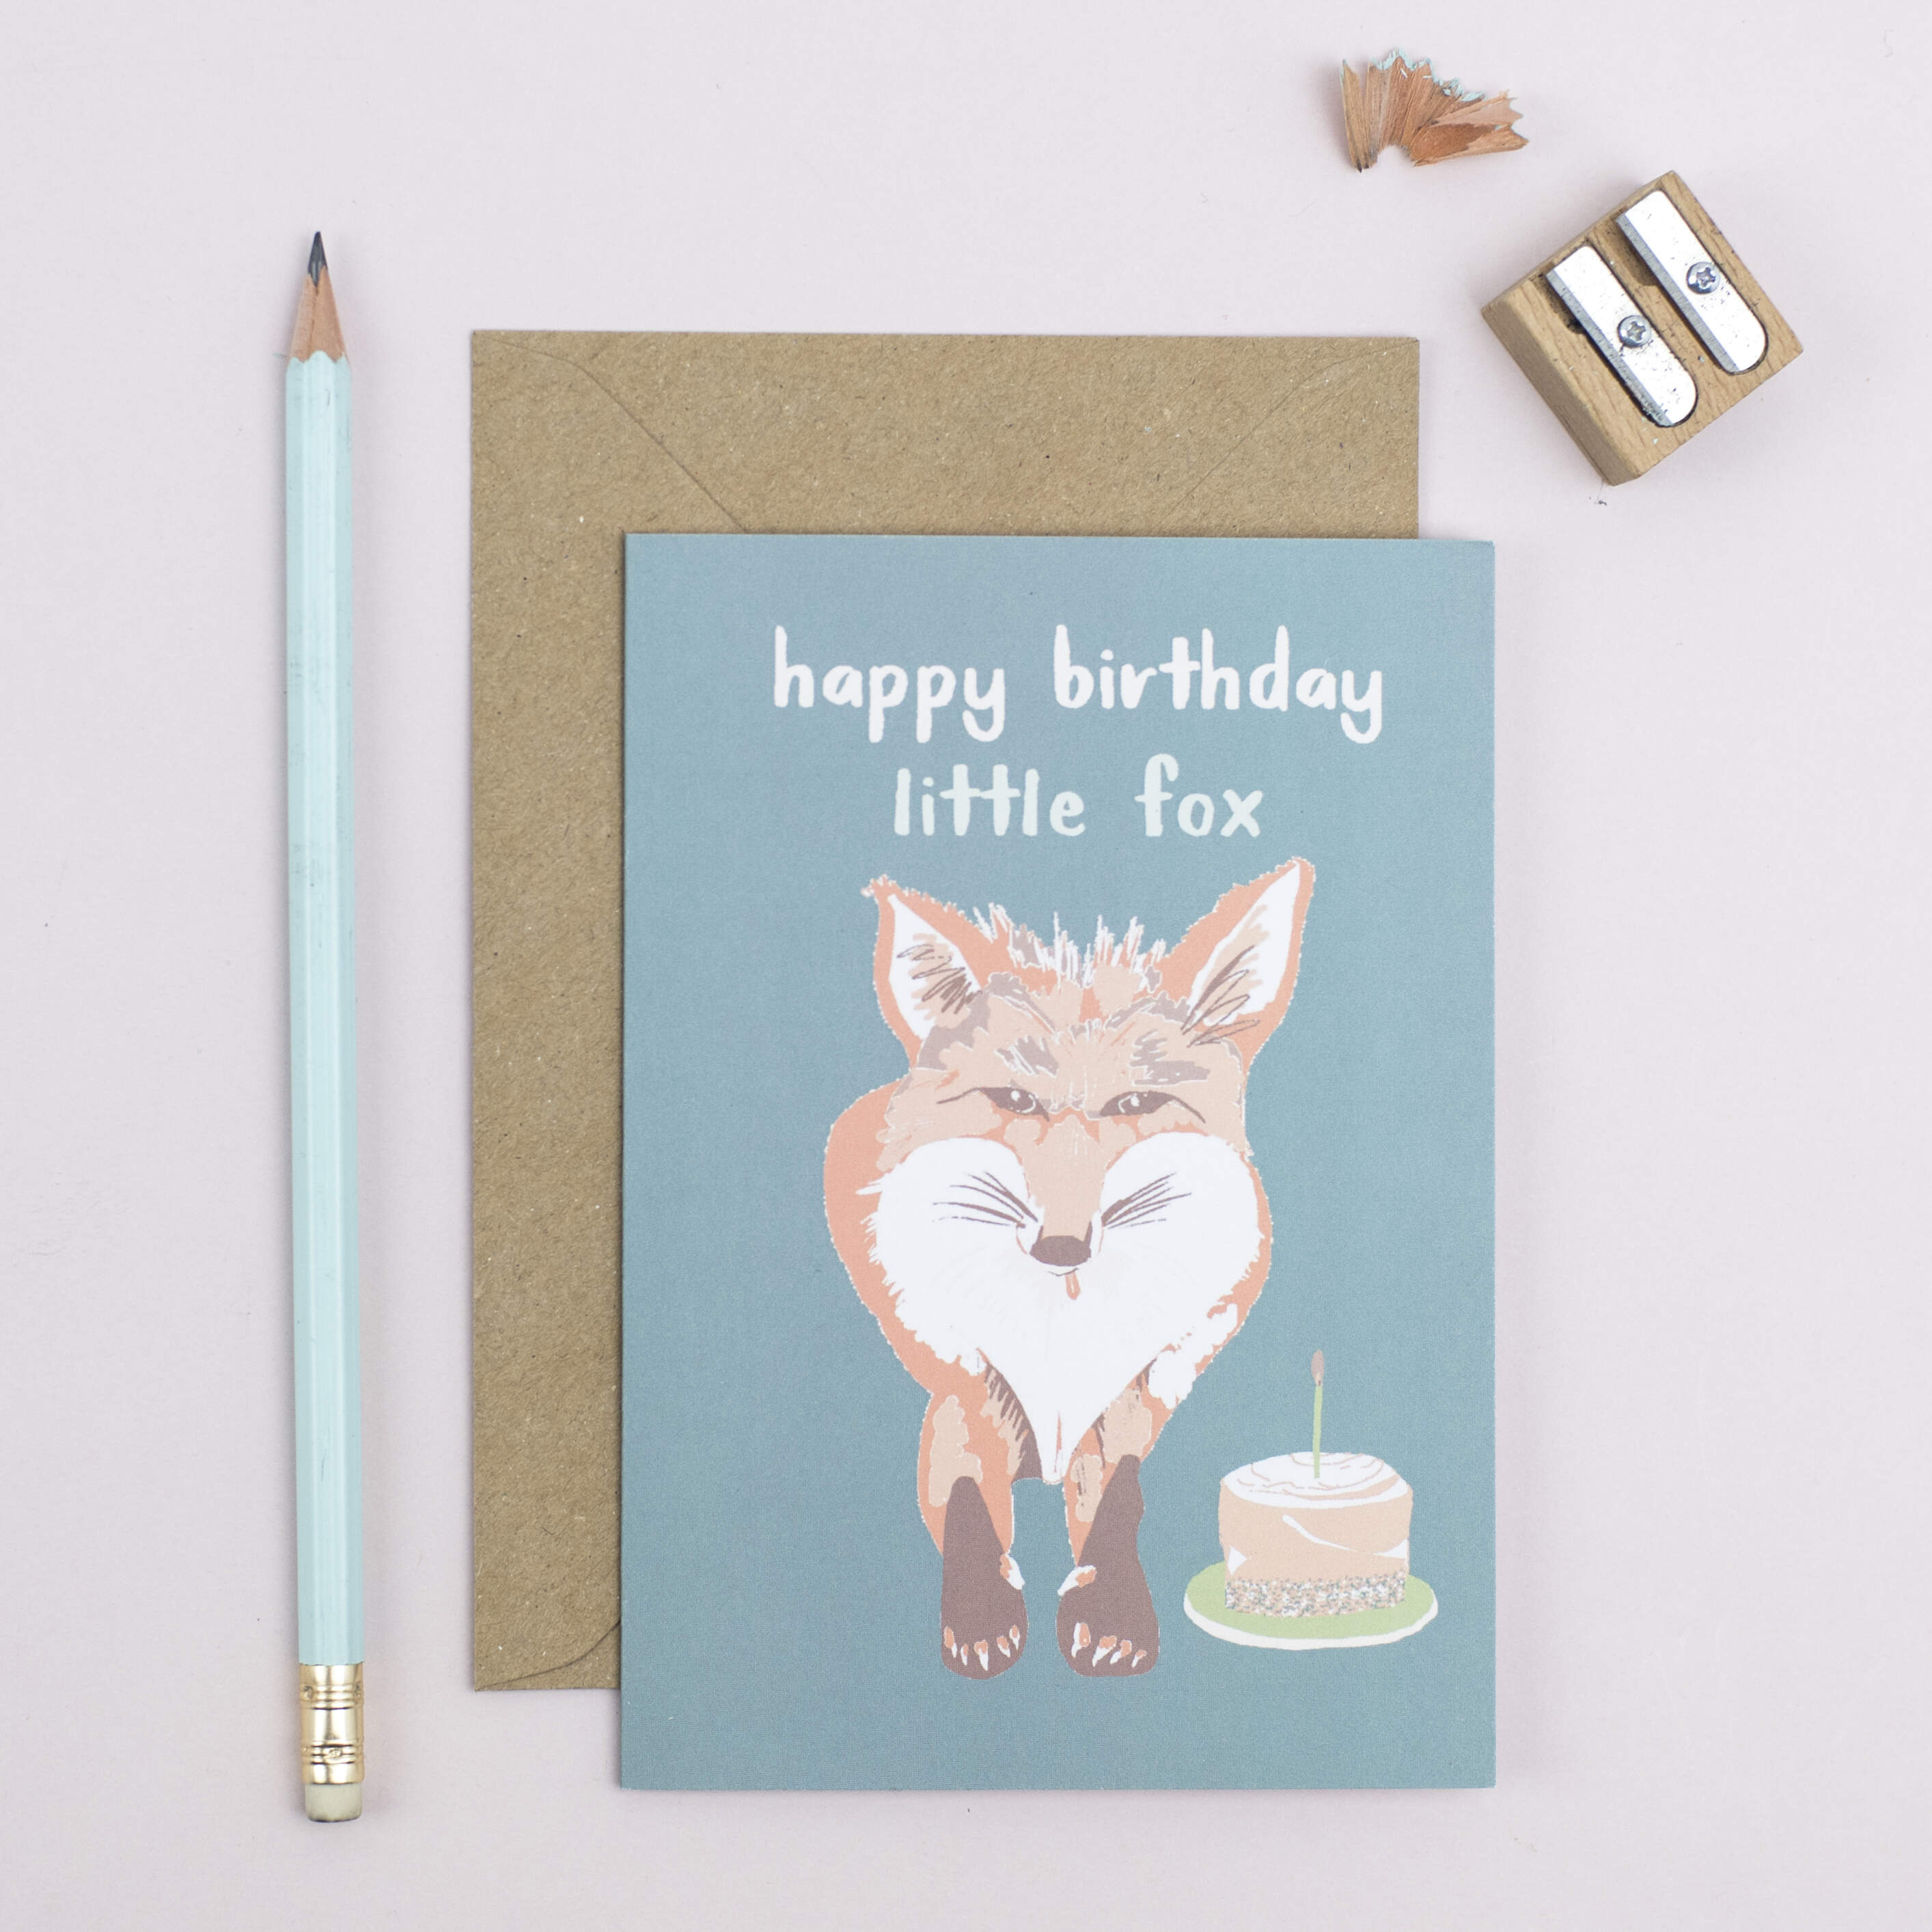 Happy Birthday little fox greetings card